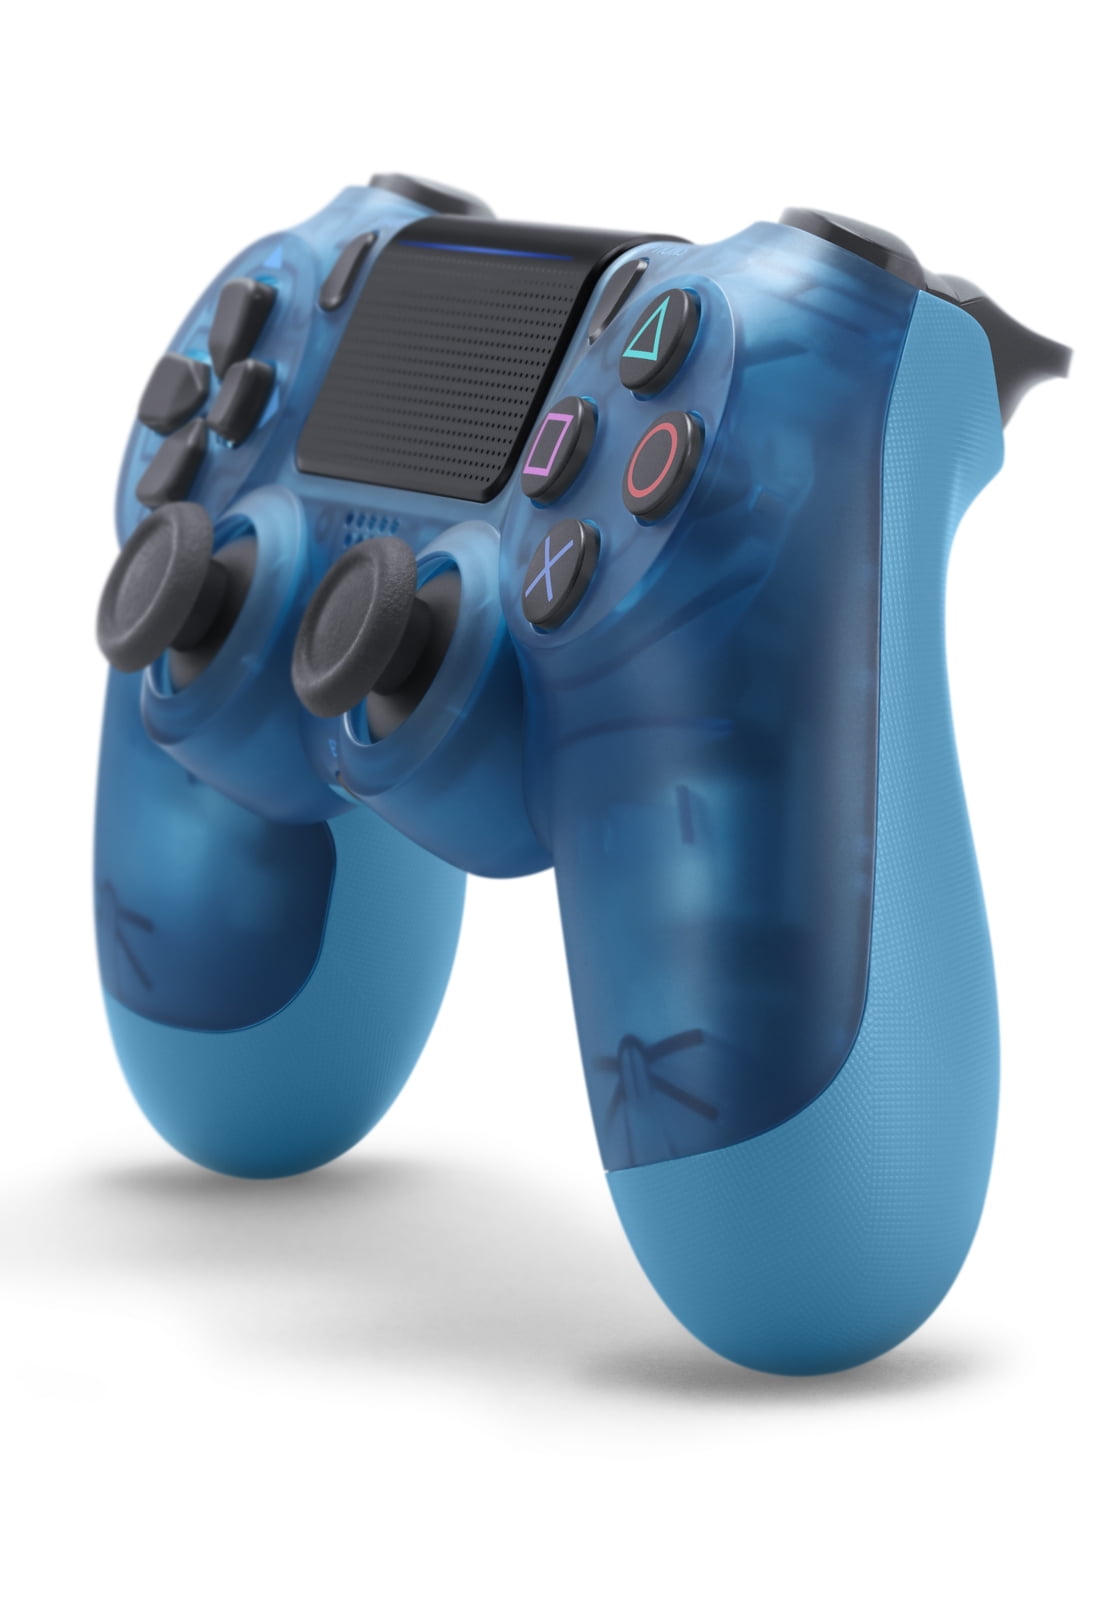 ps4 controller see through blue